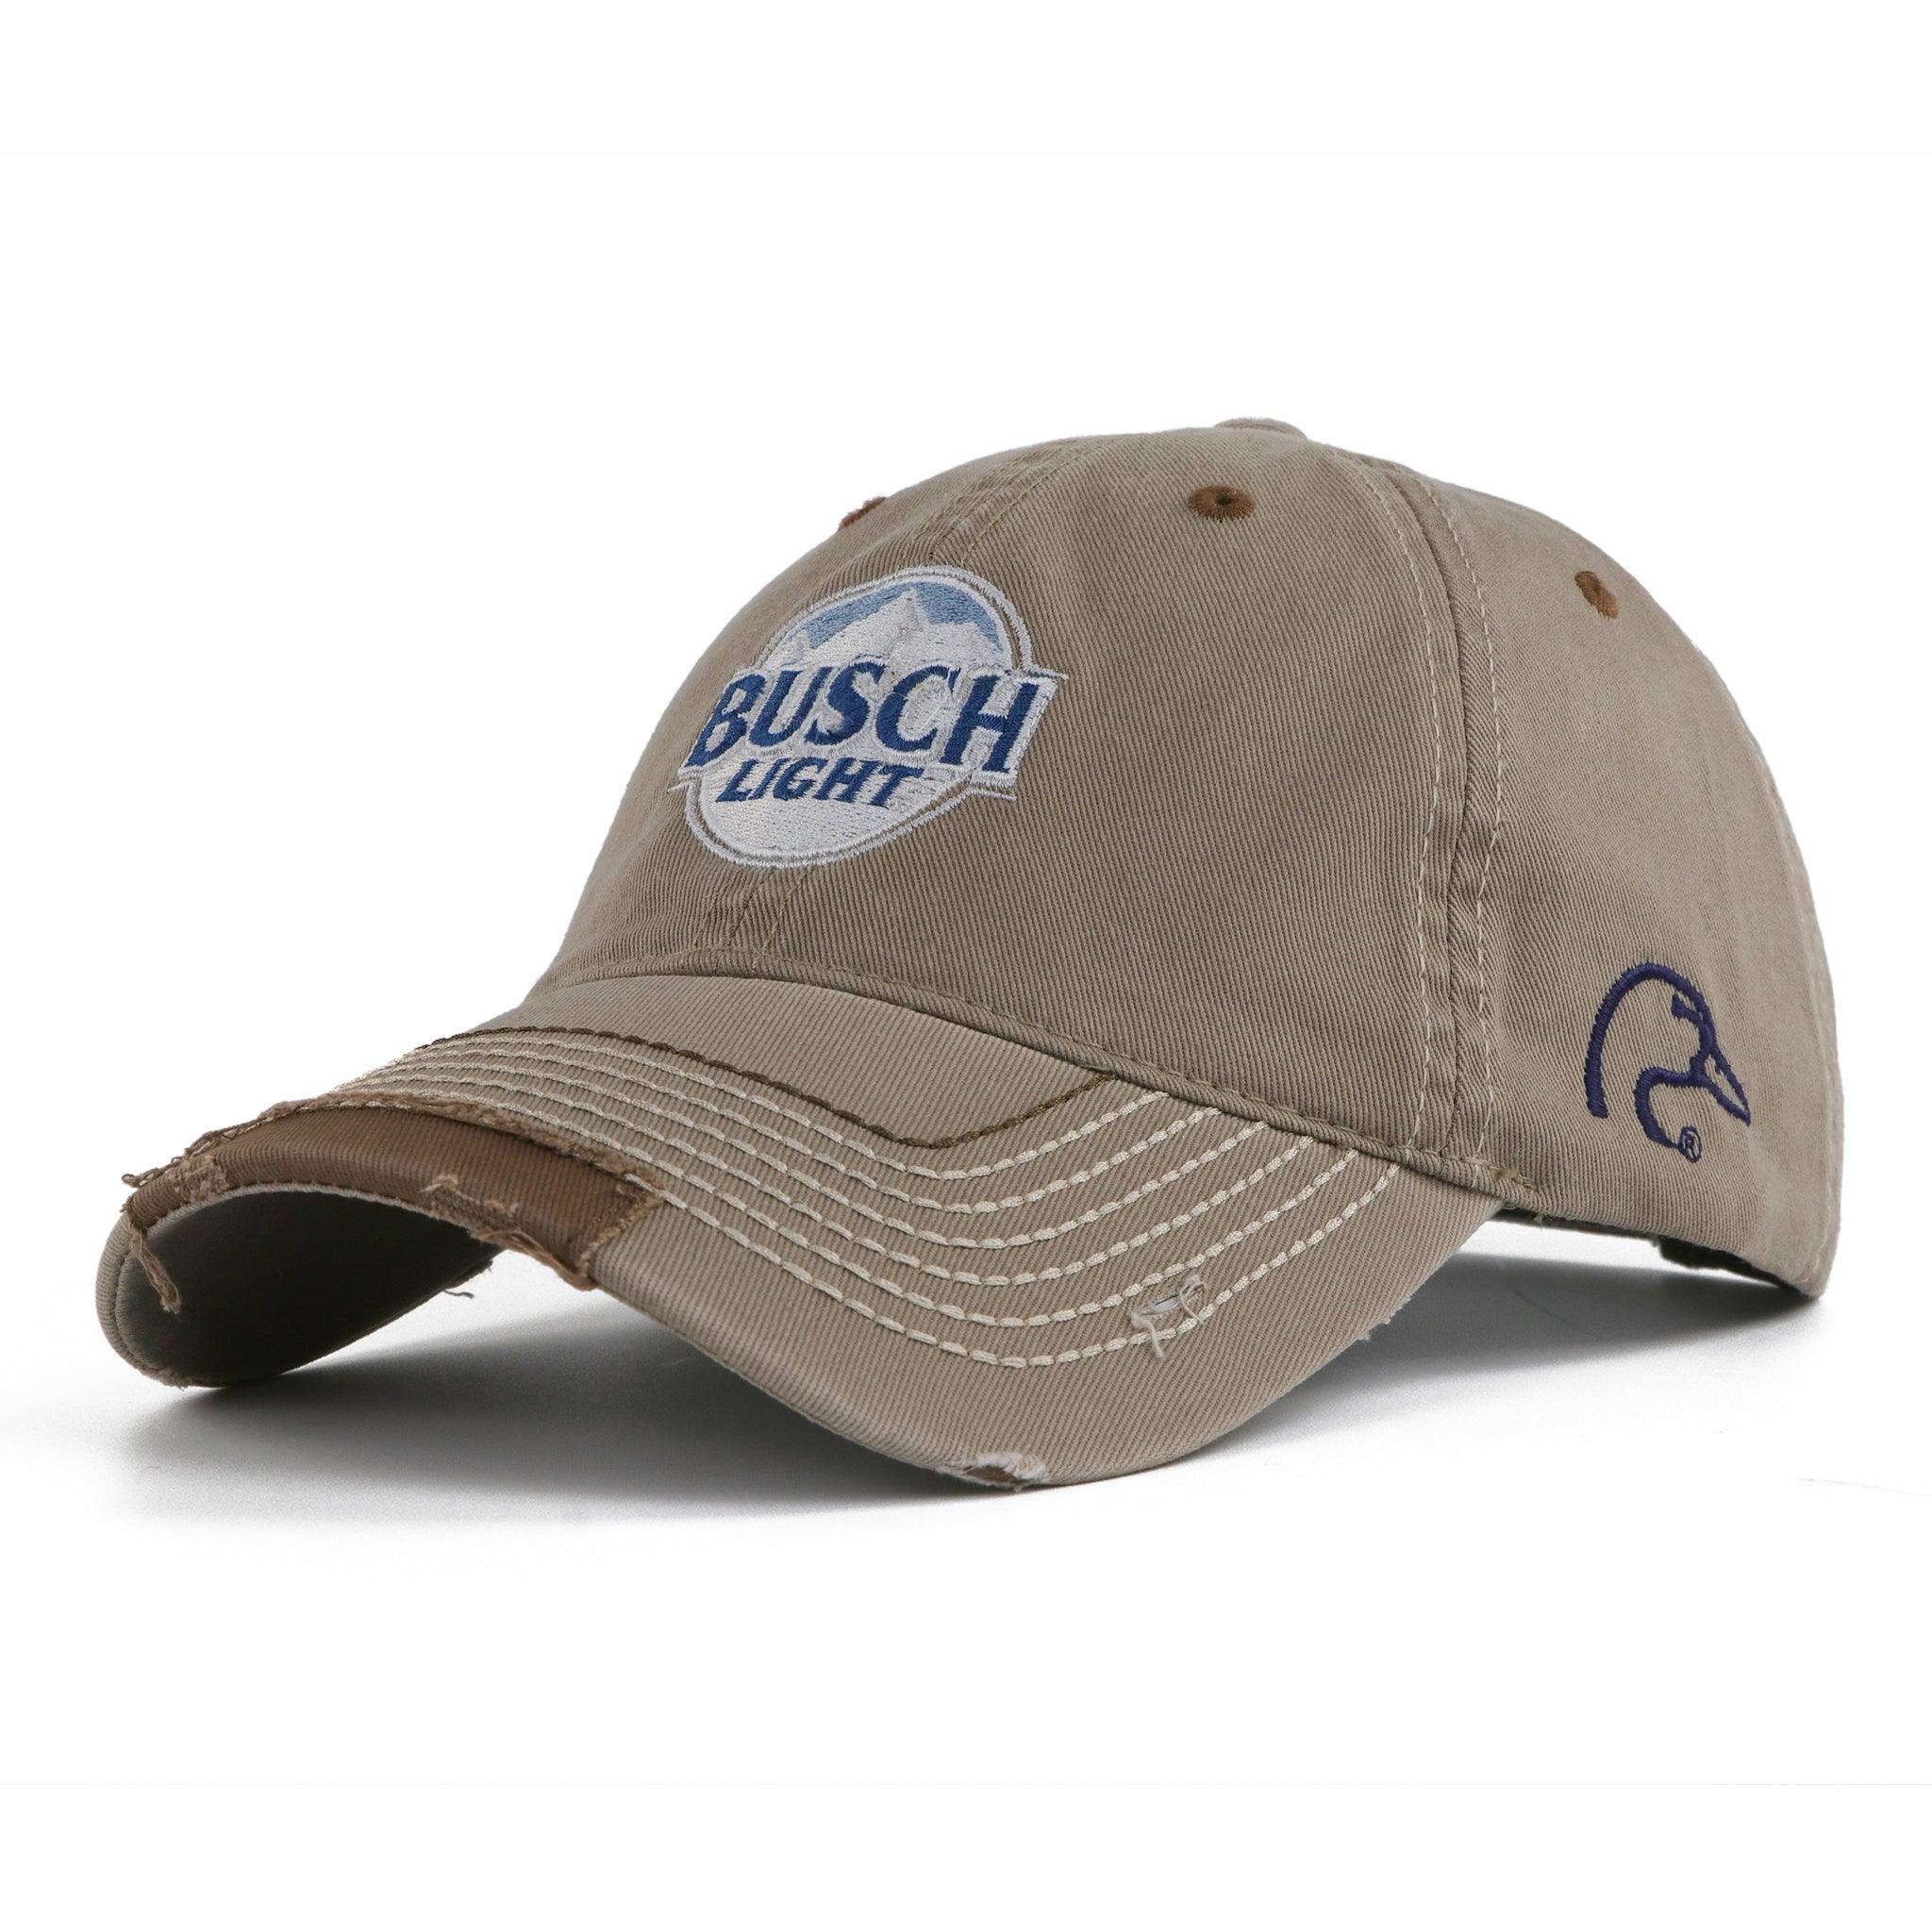 Busch Light Ducks Unlimited Rugged Hat